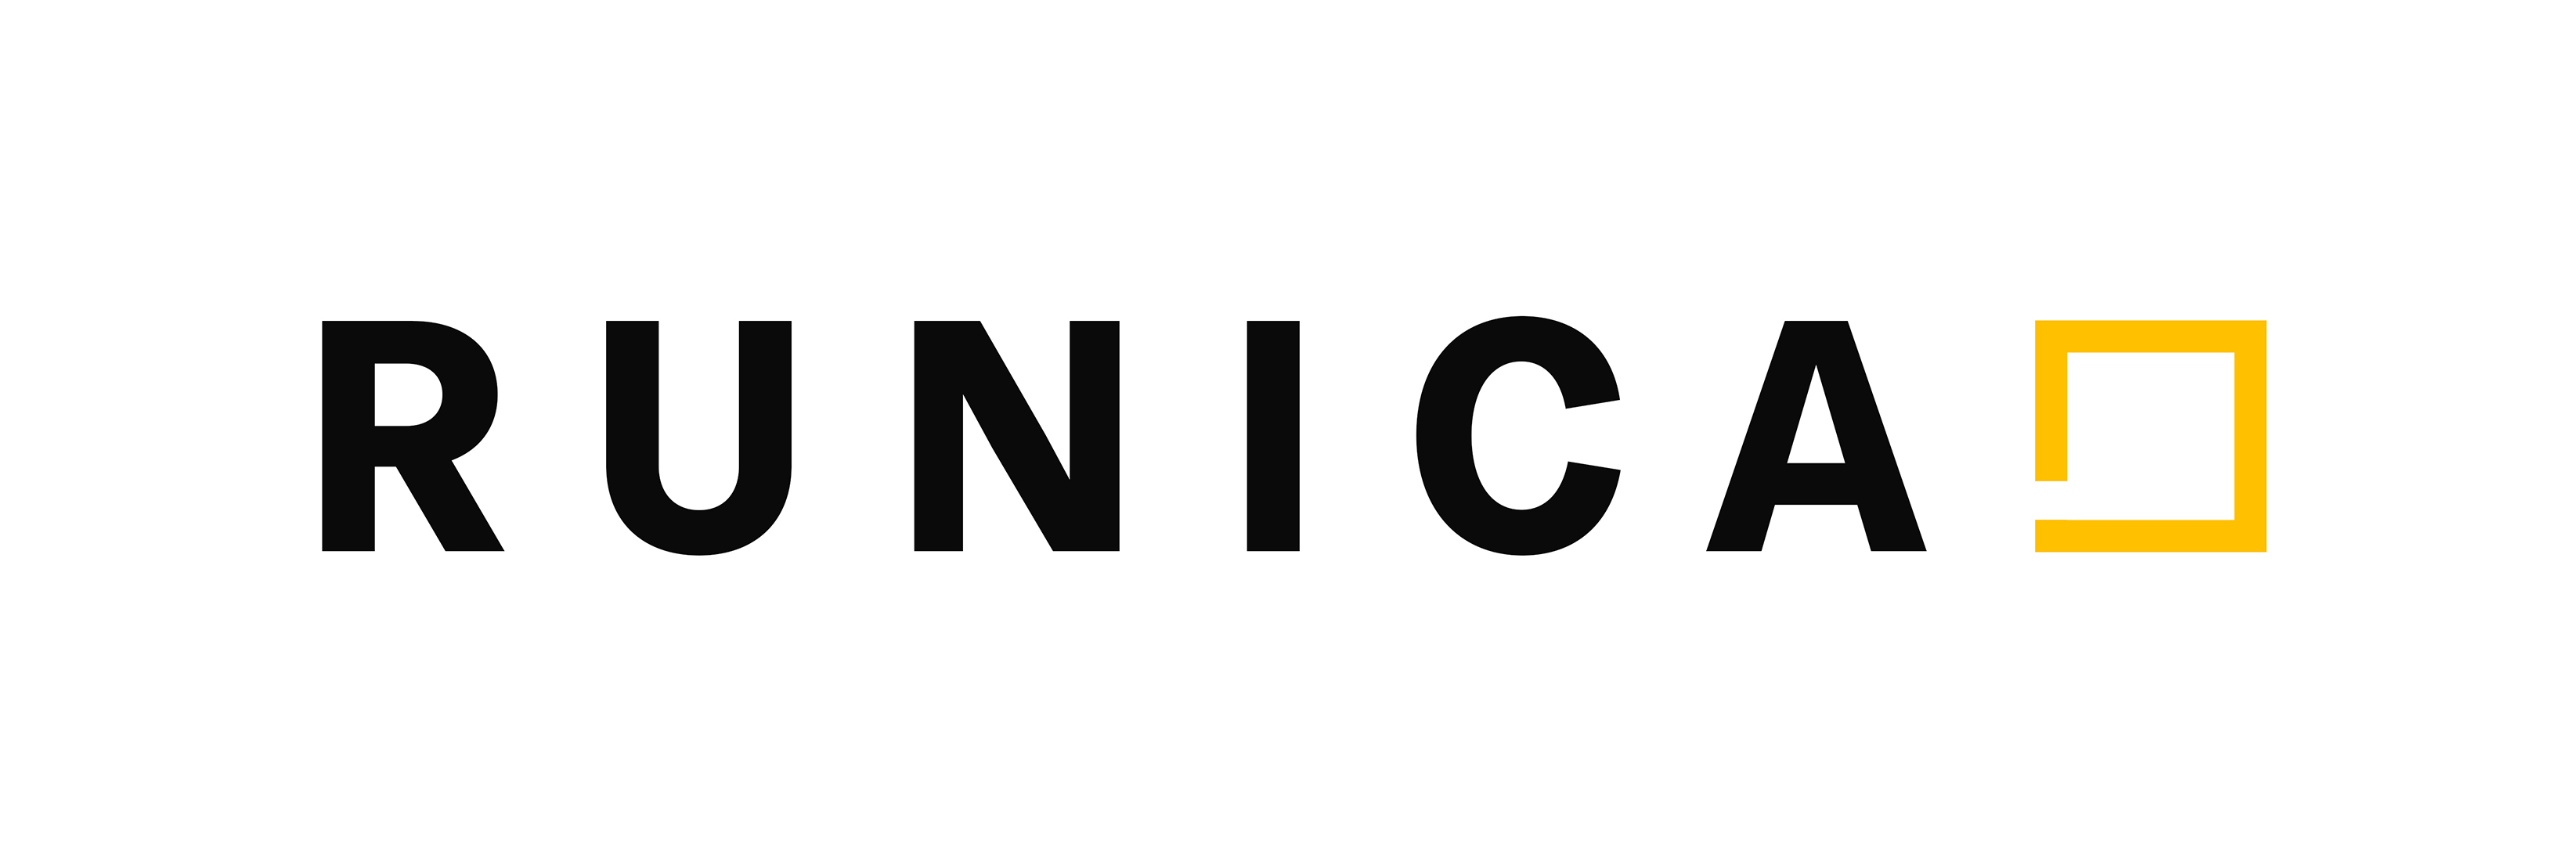 runica_logo